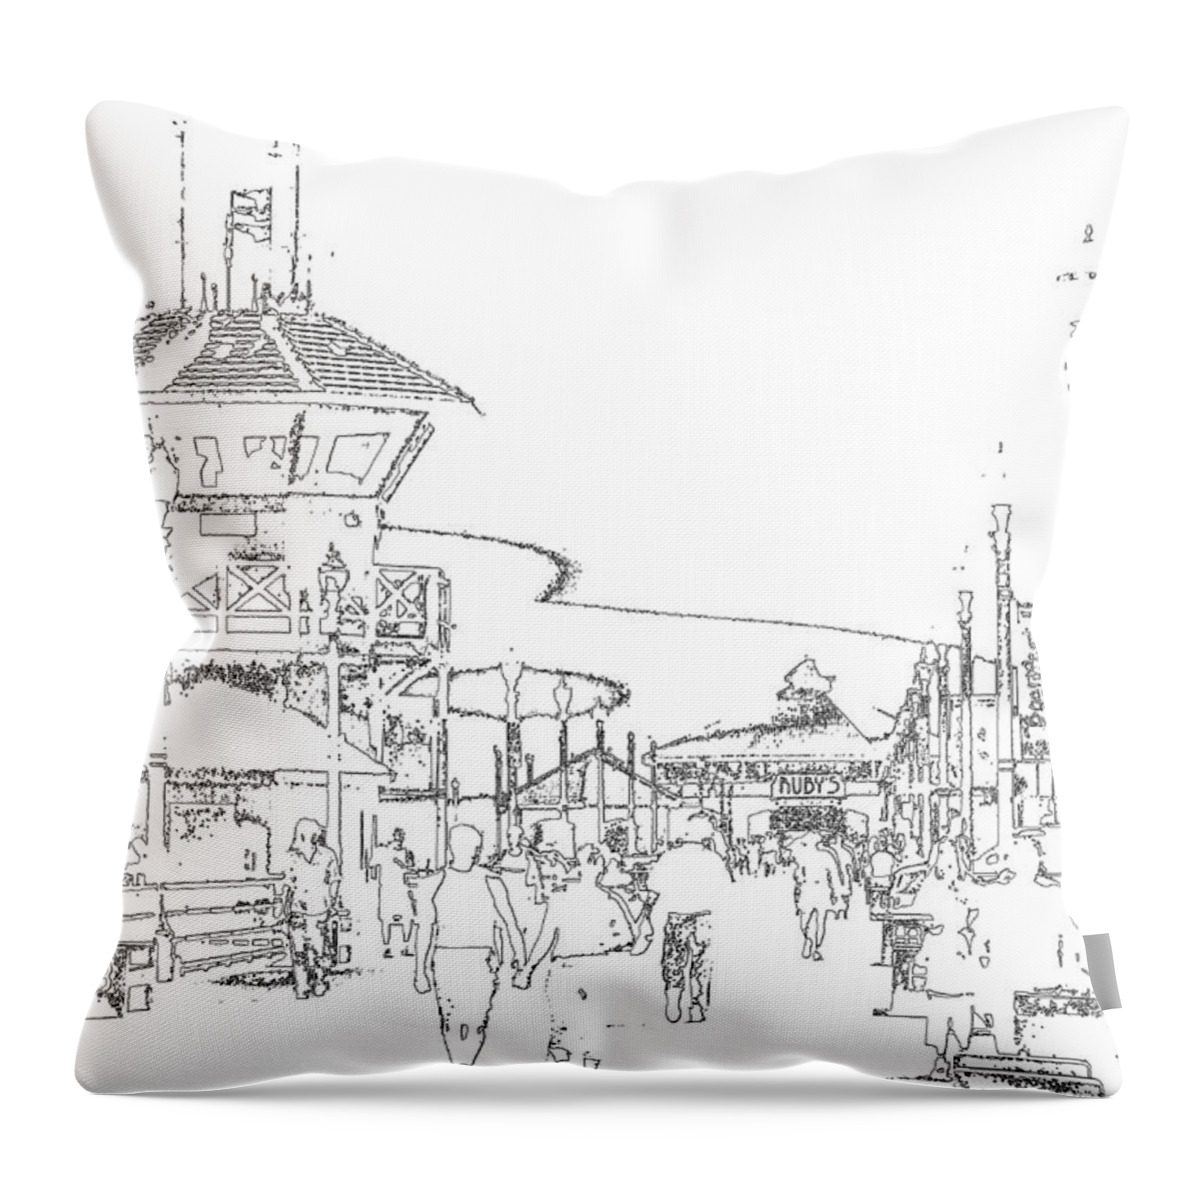 Huntington Beach Throw Pillow featuring the digital art Minimalist Huntington Beach Pier by Abstract Angel Artist Stephen K